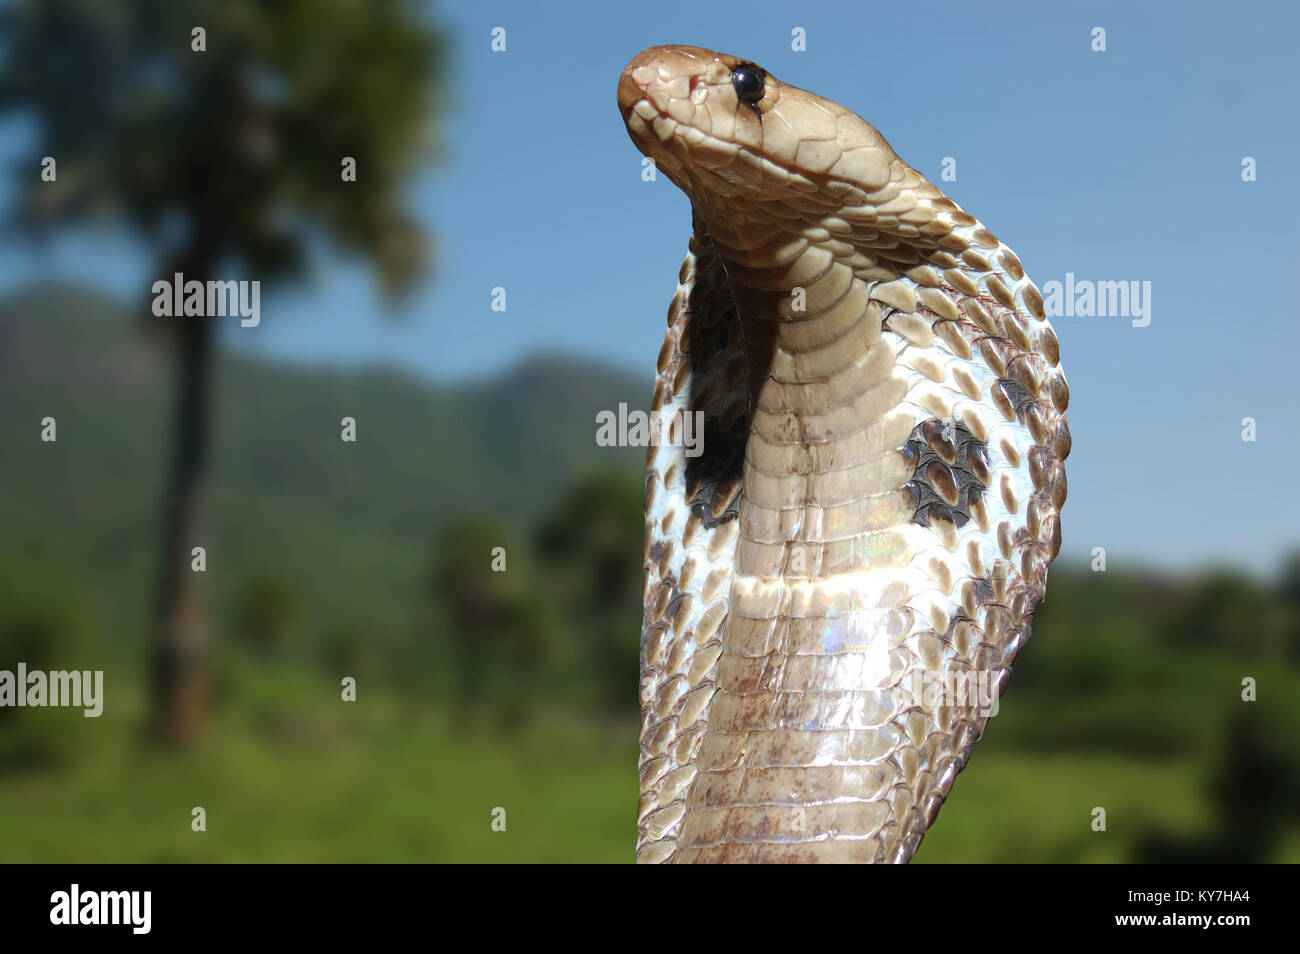 King Cobra, Naja naja, with flared hood surveys his territory in Tamil Nadu state, South India Stock Photo